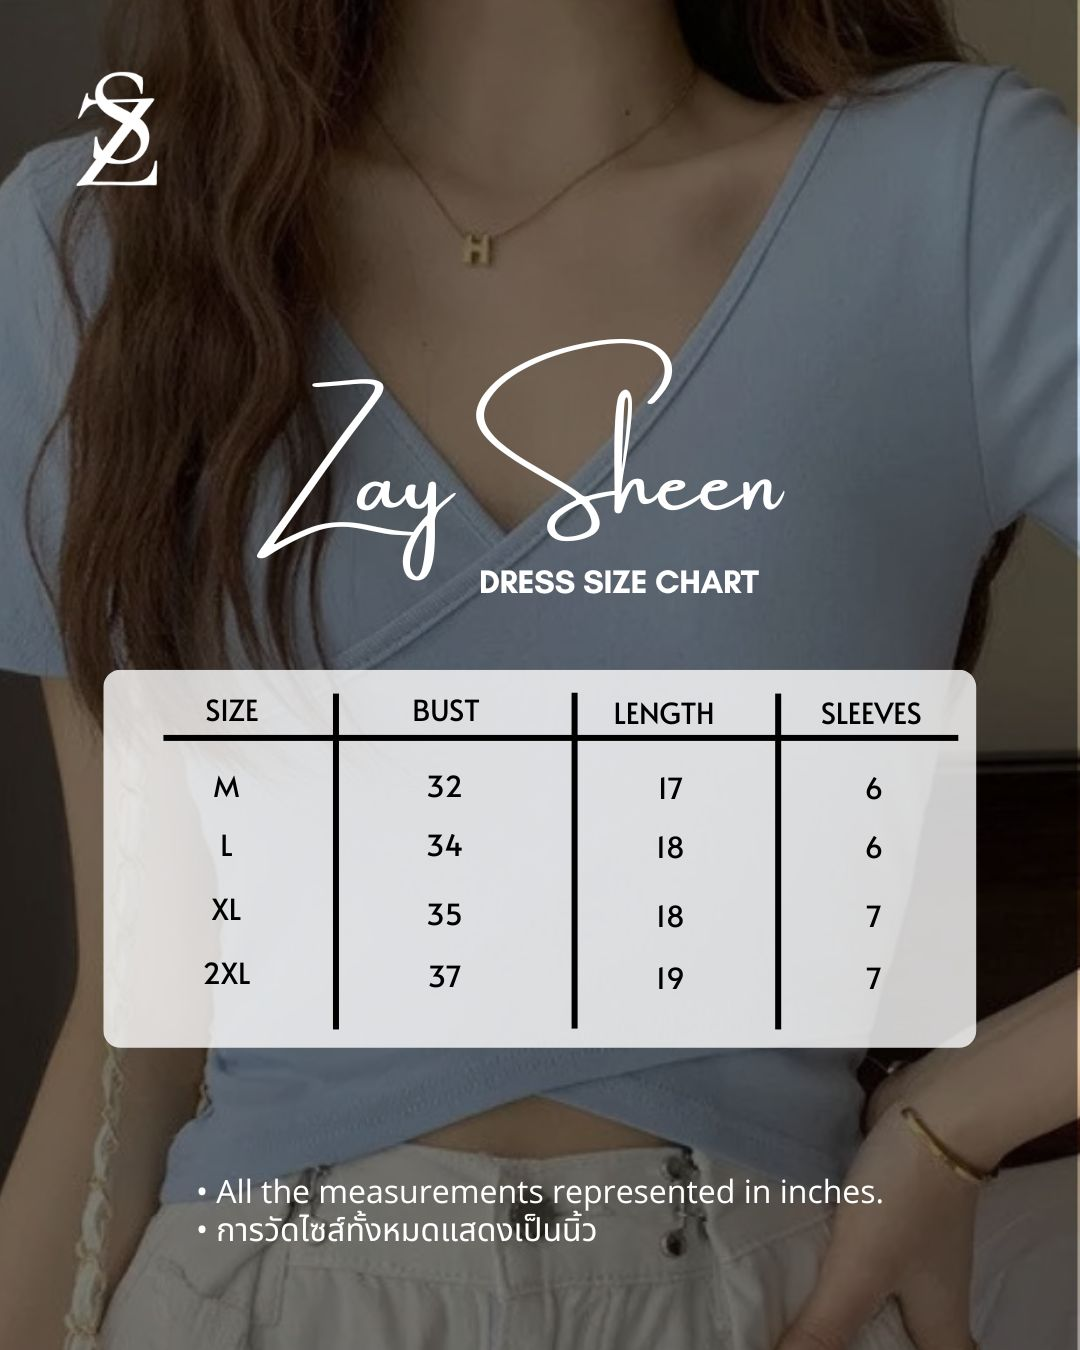 dazzling-short-sleeve-shirt-korean-style-zay-sheen-size-chart